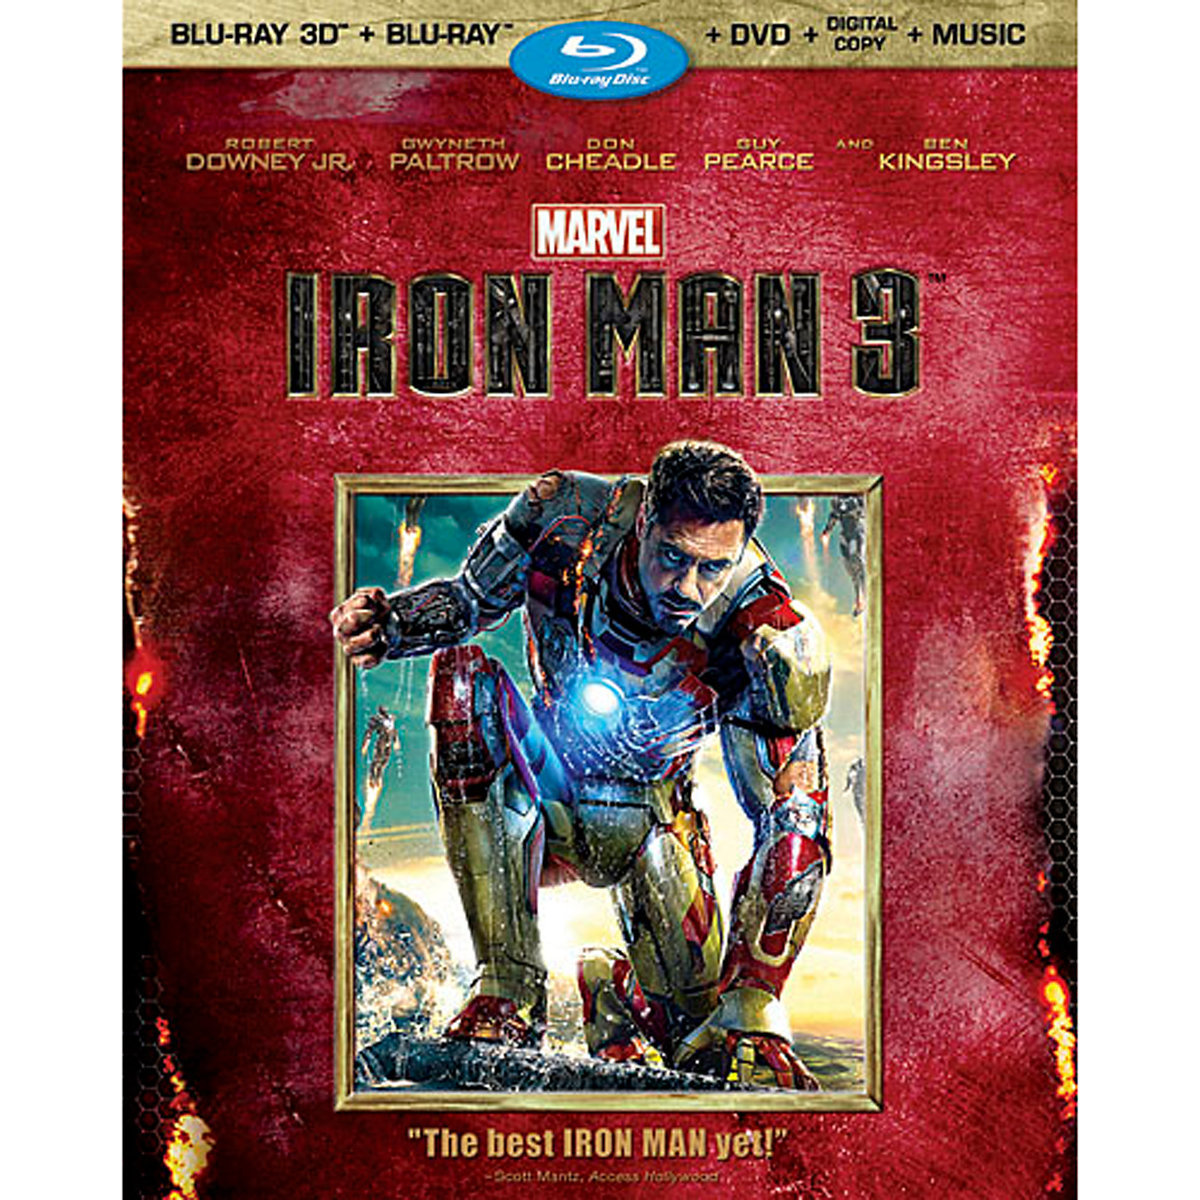 Iron Man 3 (Blu-ray 3D + Blu-ray + DVD + Digital Copy + Music) - image 1 of 5